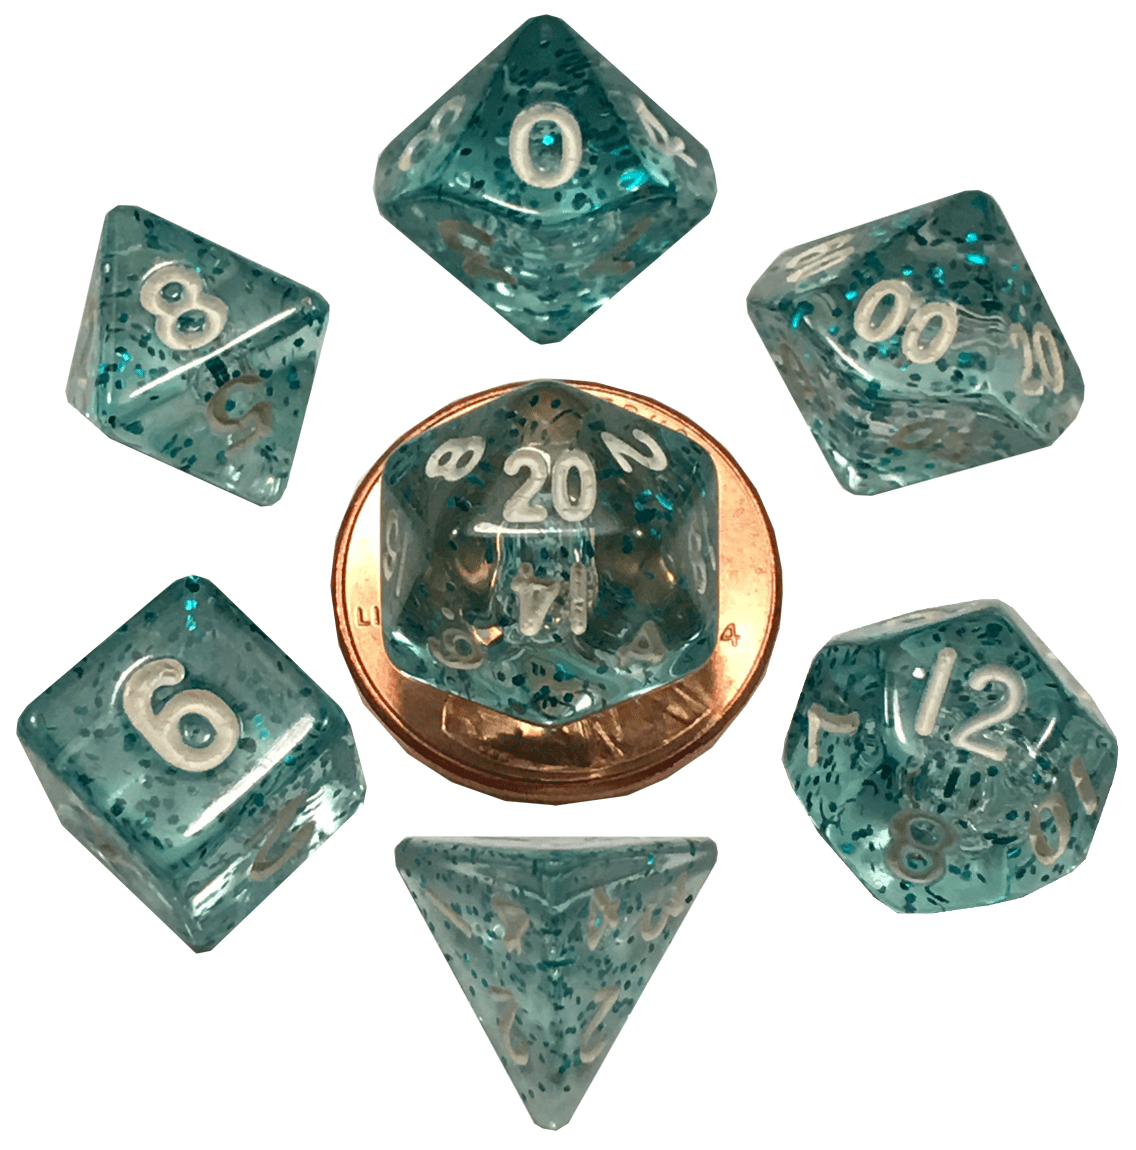 10mm Mini Acrylic Polyhedral Set -Purple/Teal w/Blue Numbers 4172